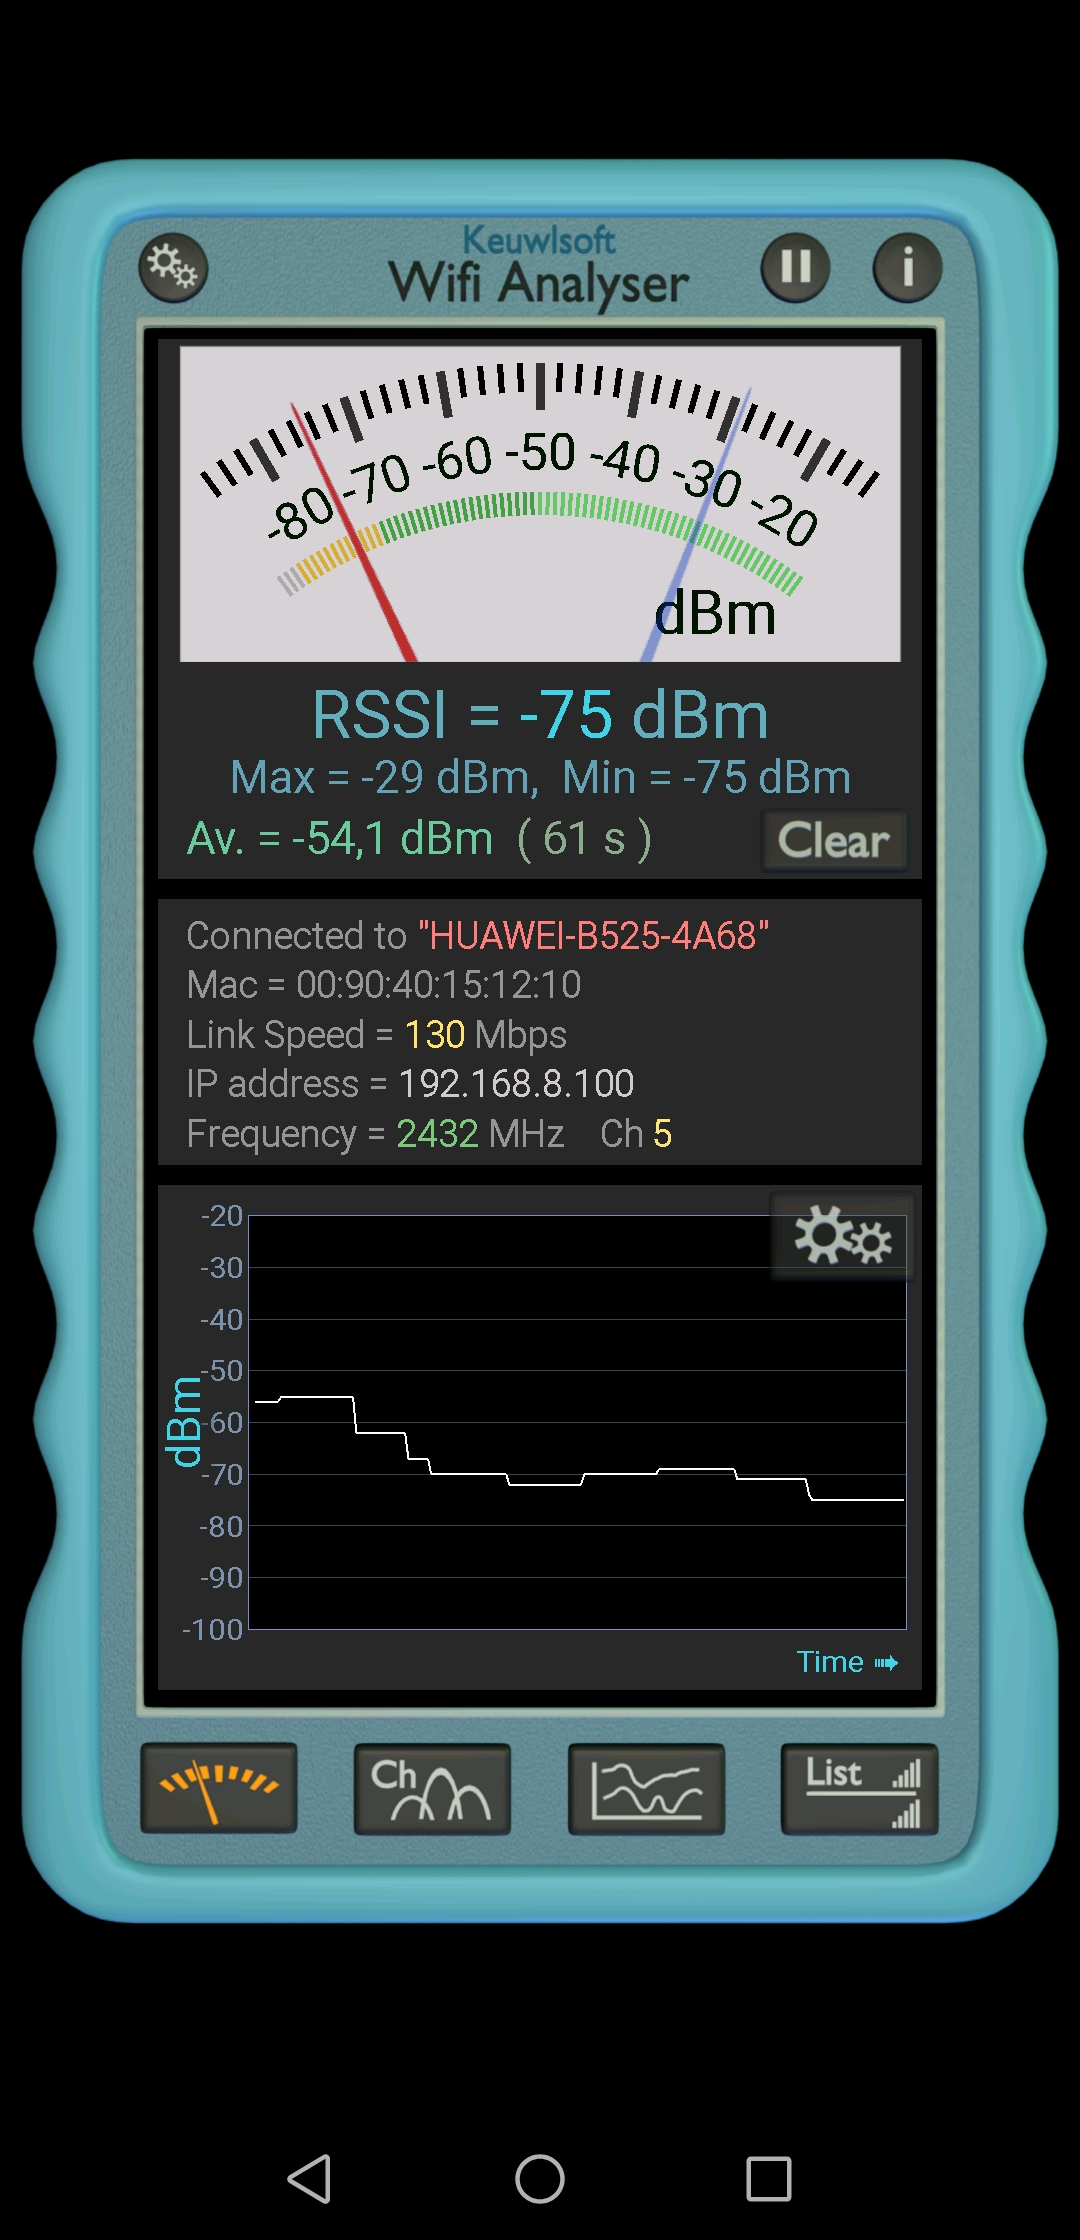 Clear connection. WIFI Analyzer APK. 2452 MHZ. Sound Generator Android keuwlsoft.